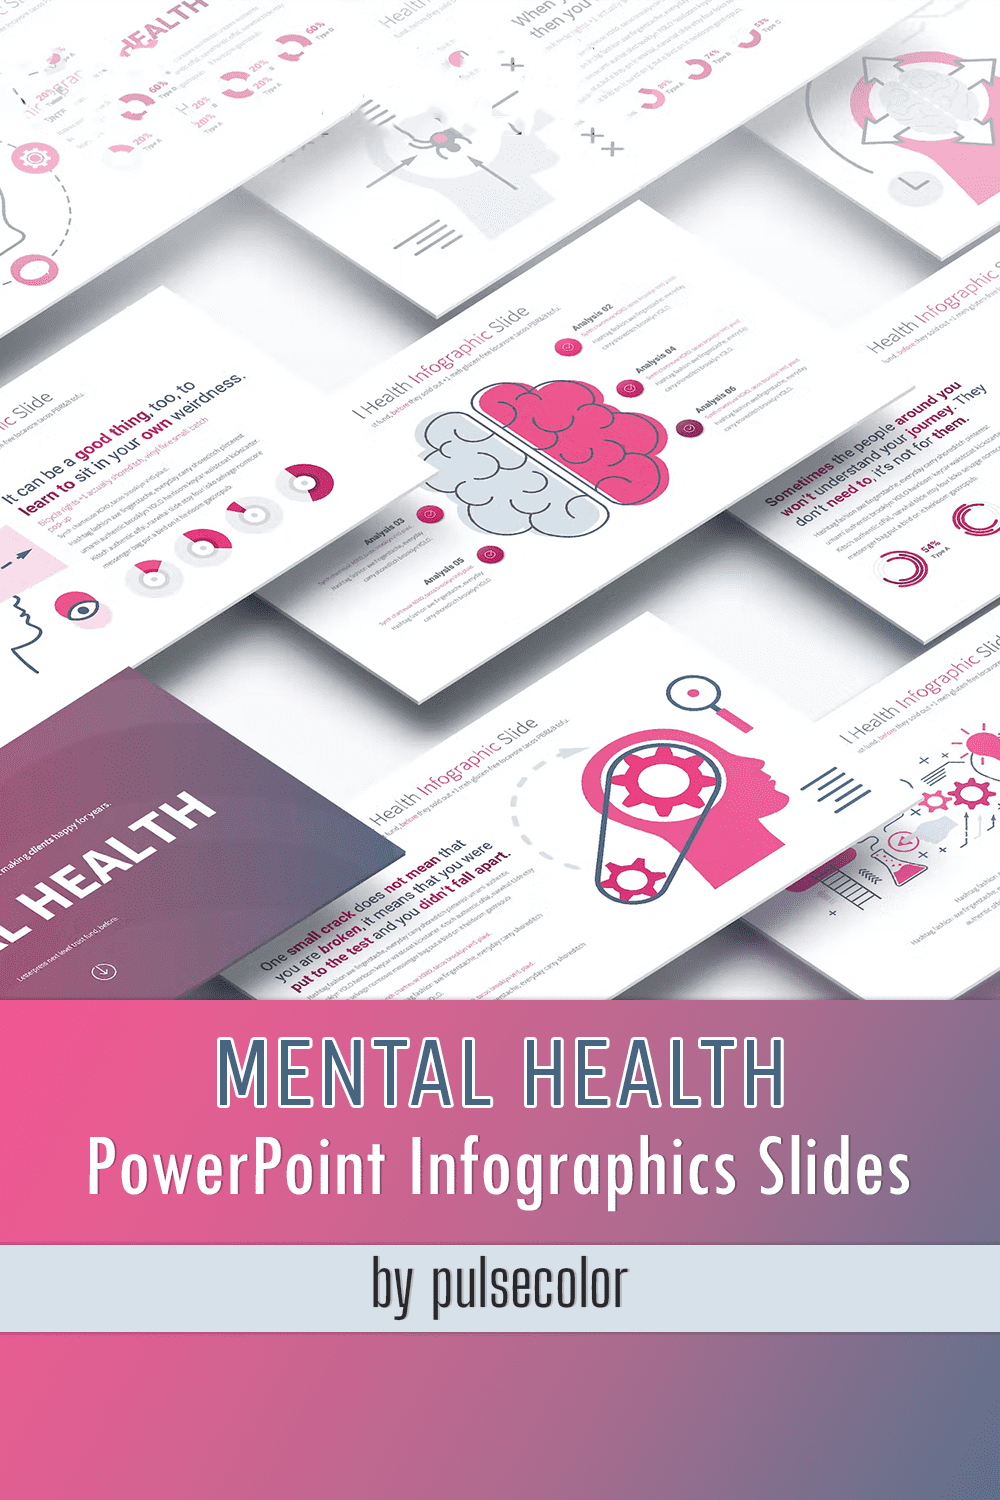 Mental Health - Powerpoint Infographics Slides - Pinterest.